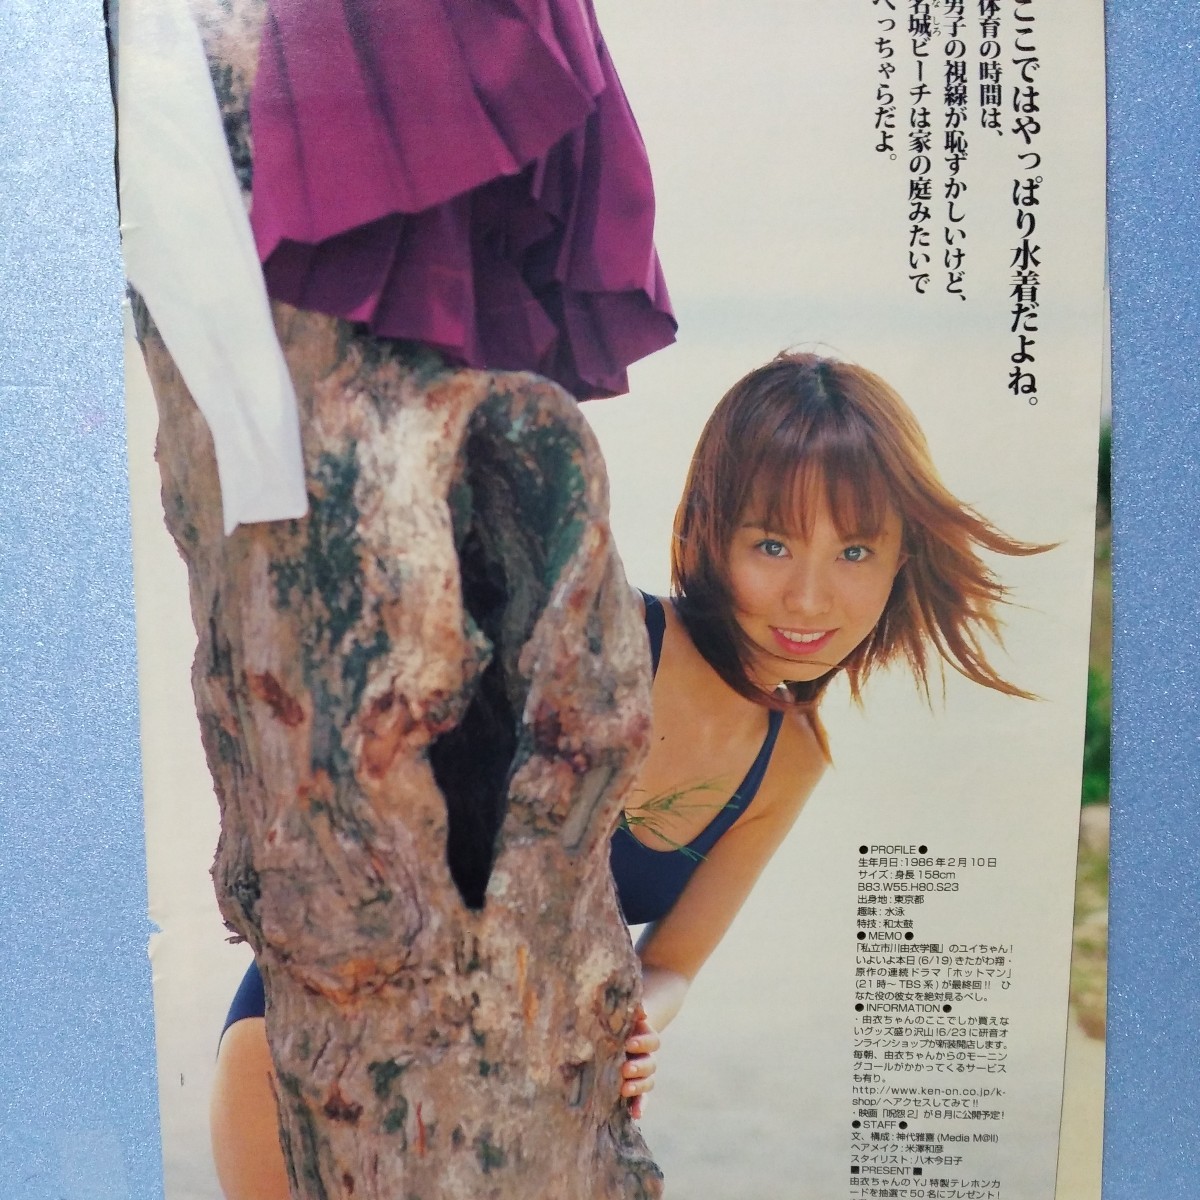 * Ichikawa Yui * журнал вырезки 8P life photograph ( очень редкий )yan Jean обложка только певец женщина super звезда bikini model купальный костюм бикини включая доставку ①